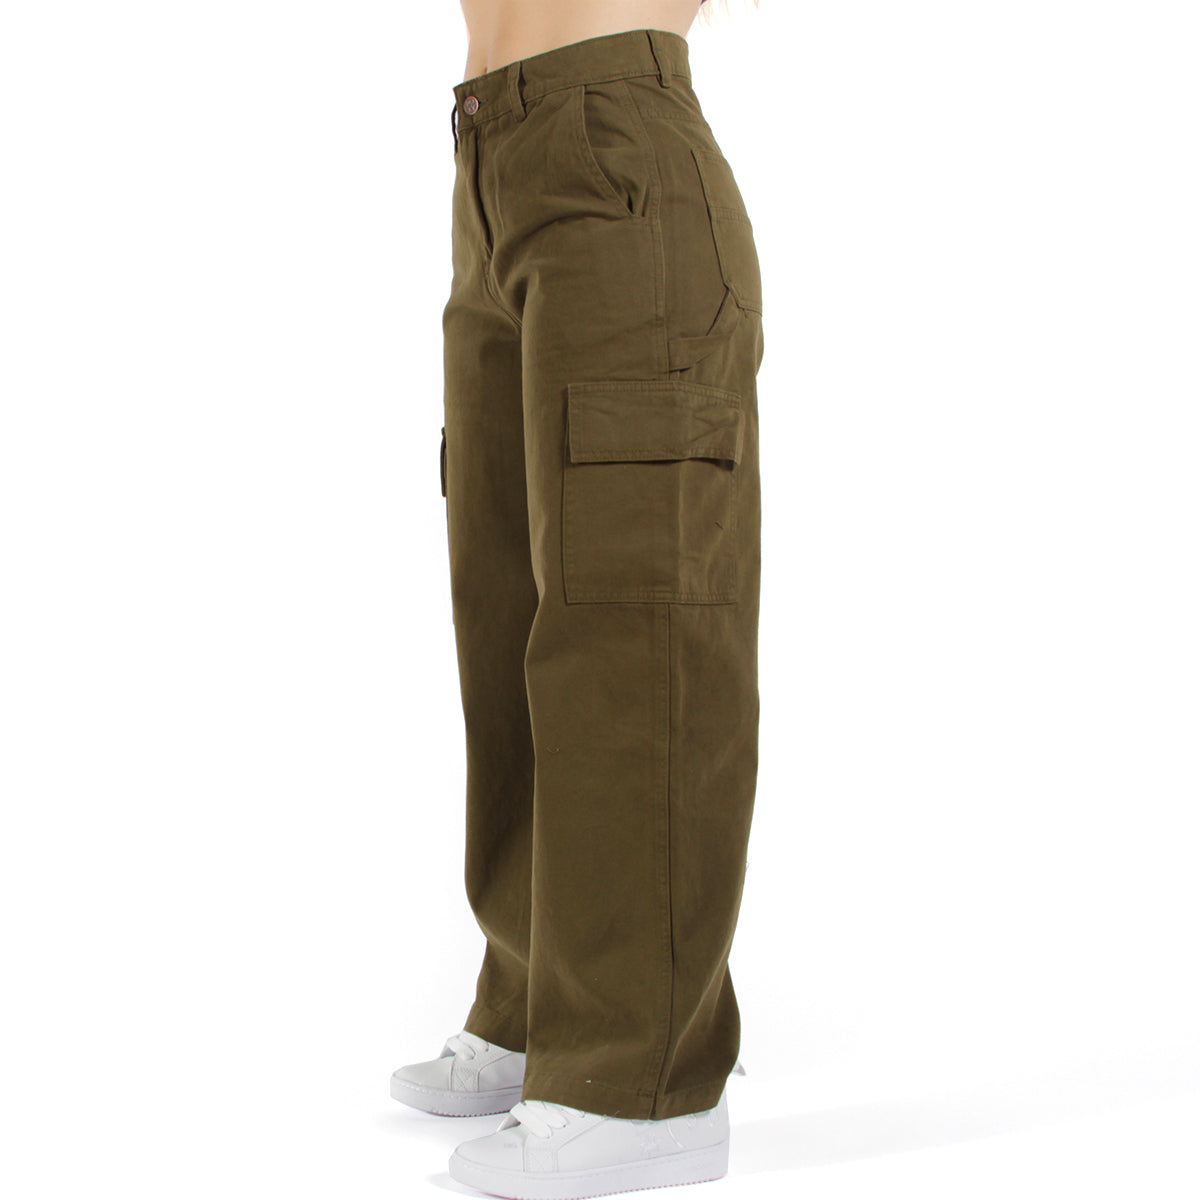 Pantalon Roxy Lefty Cargo Verde Militar - Indy